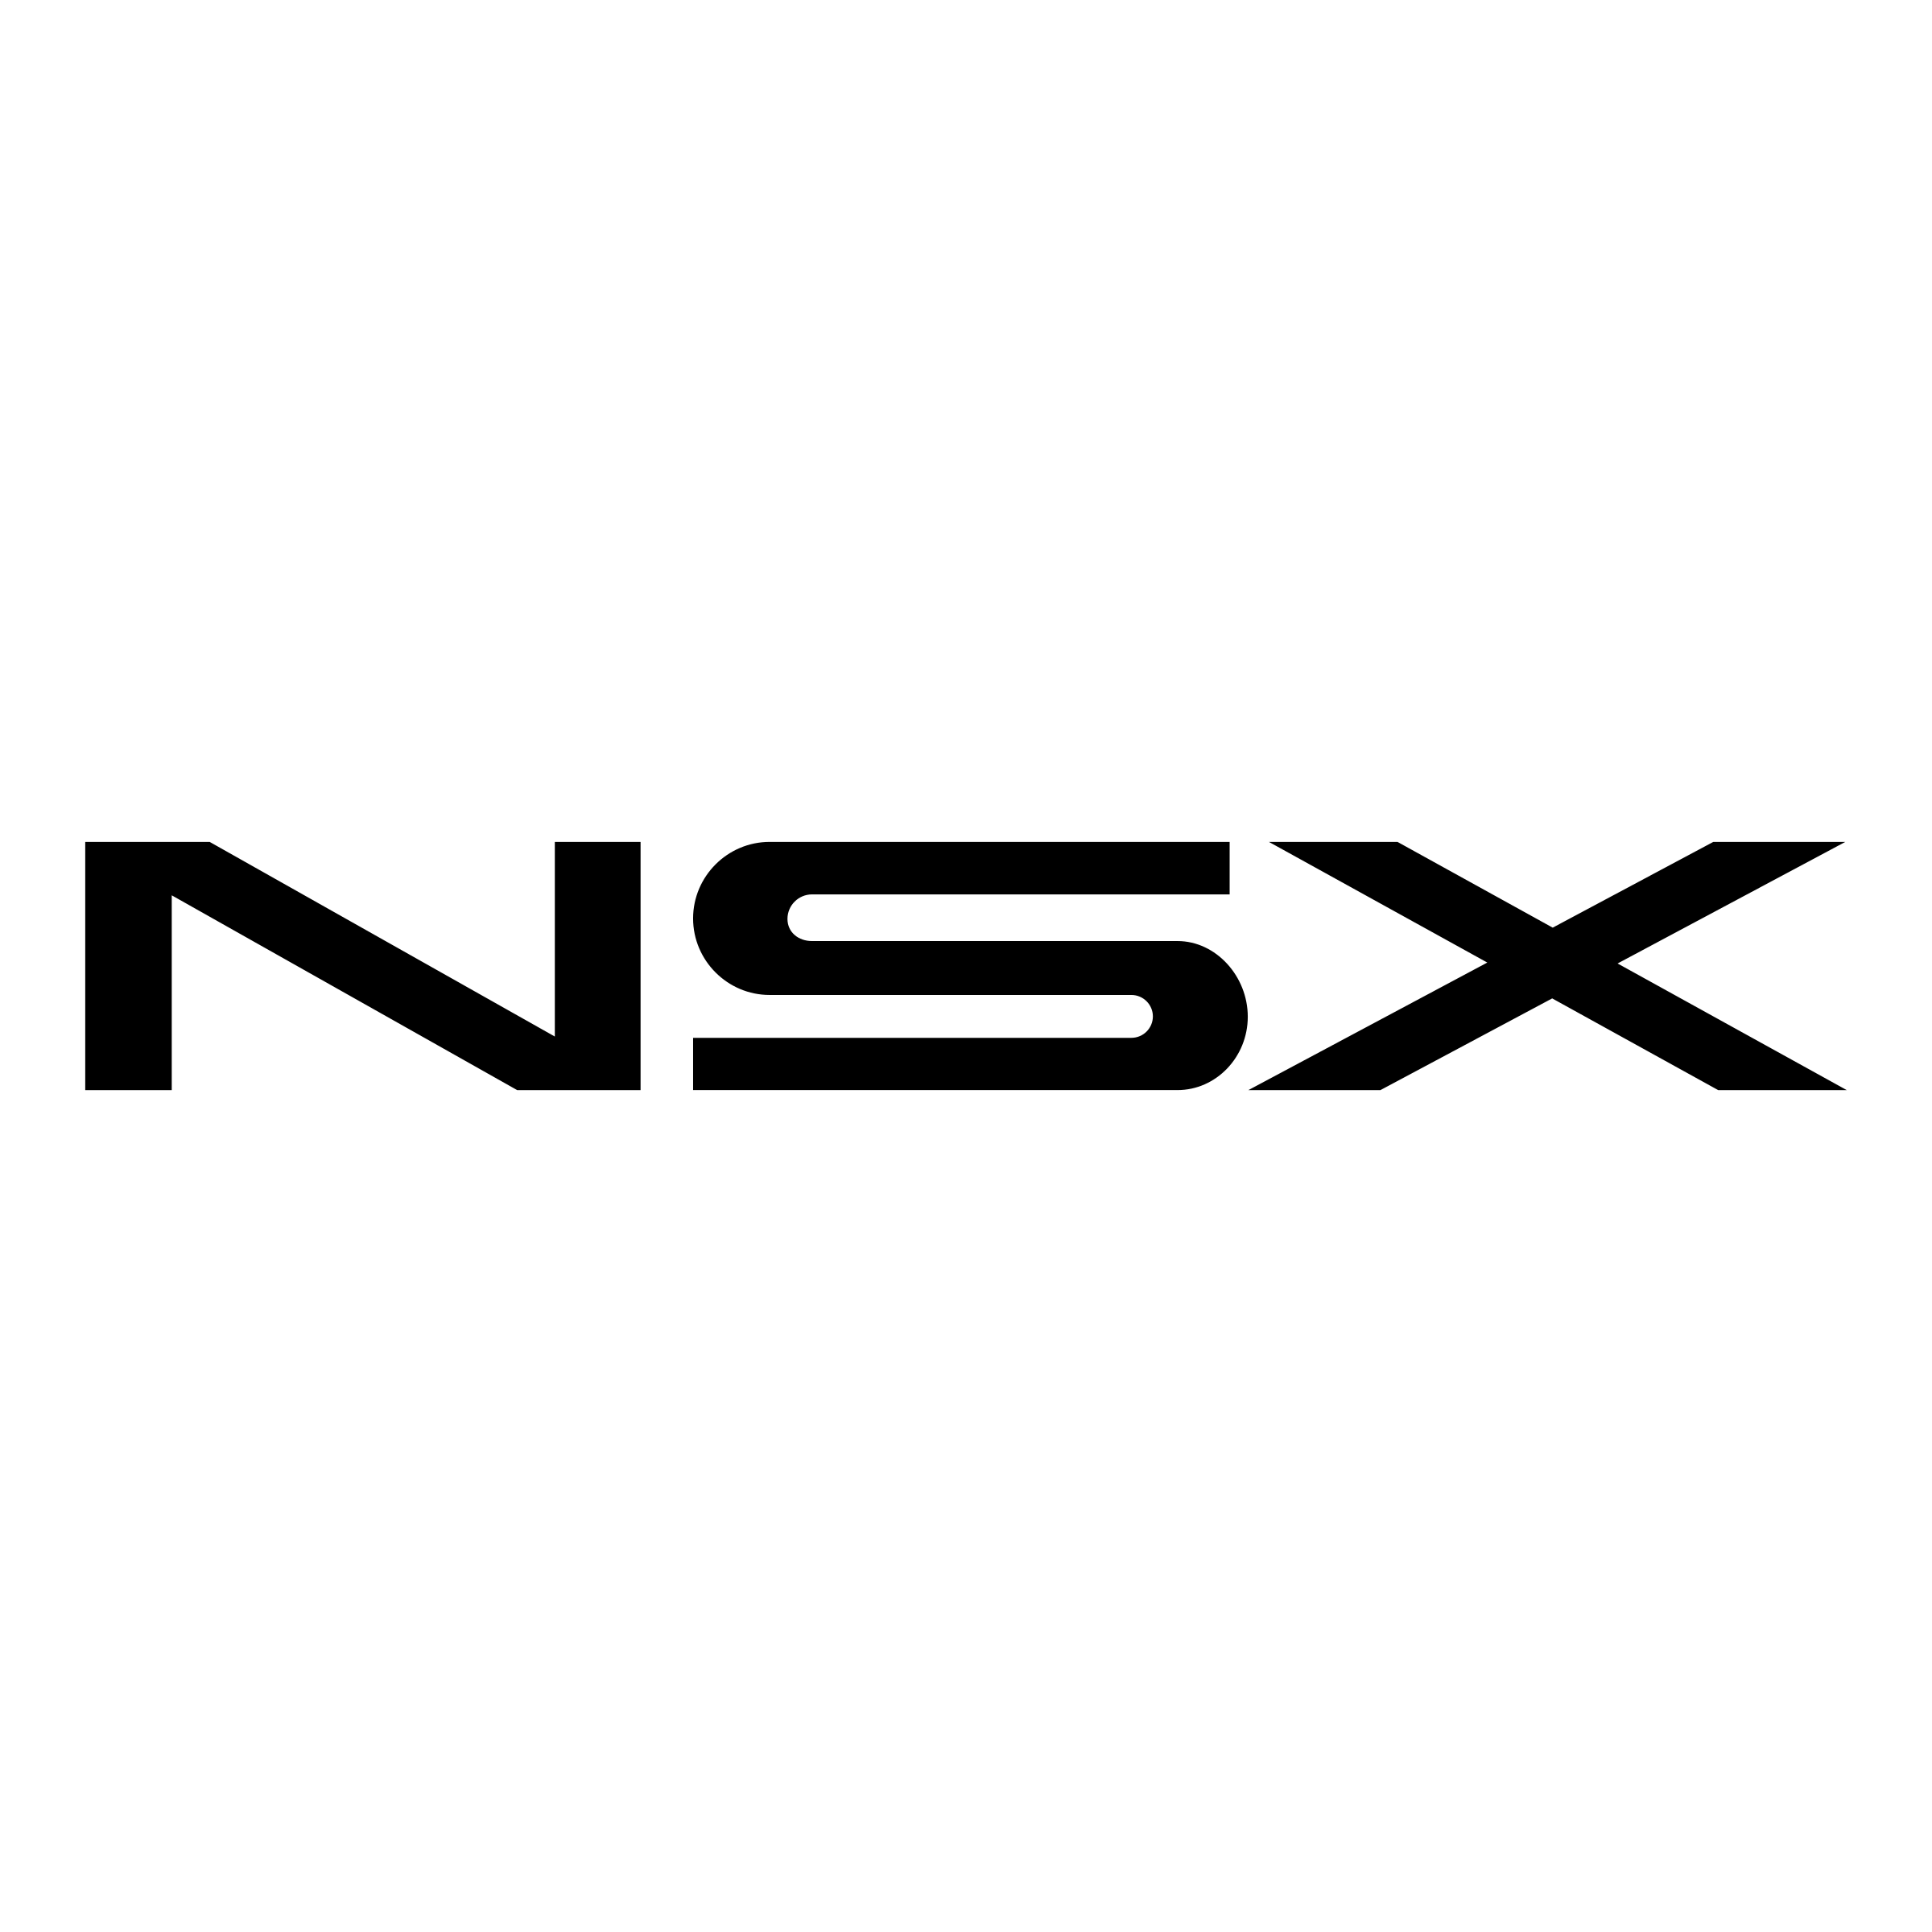 NSX Logo - NSX Acura Logo PNG Transparent & SVG Vector - Freebie Supply